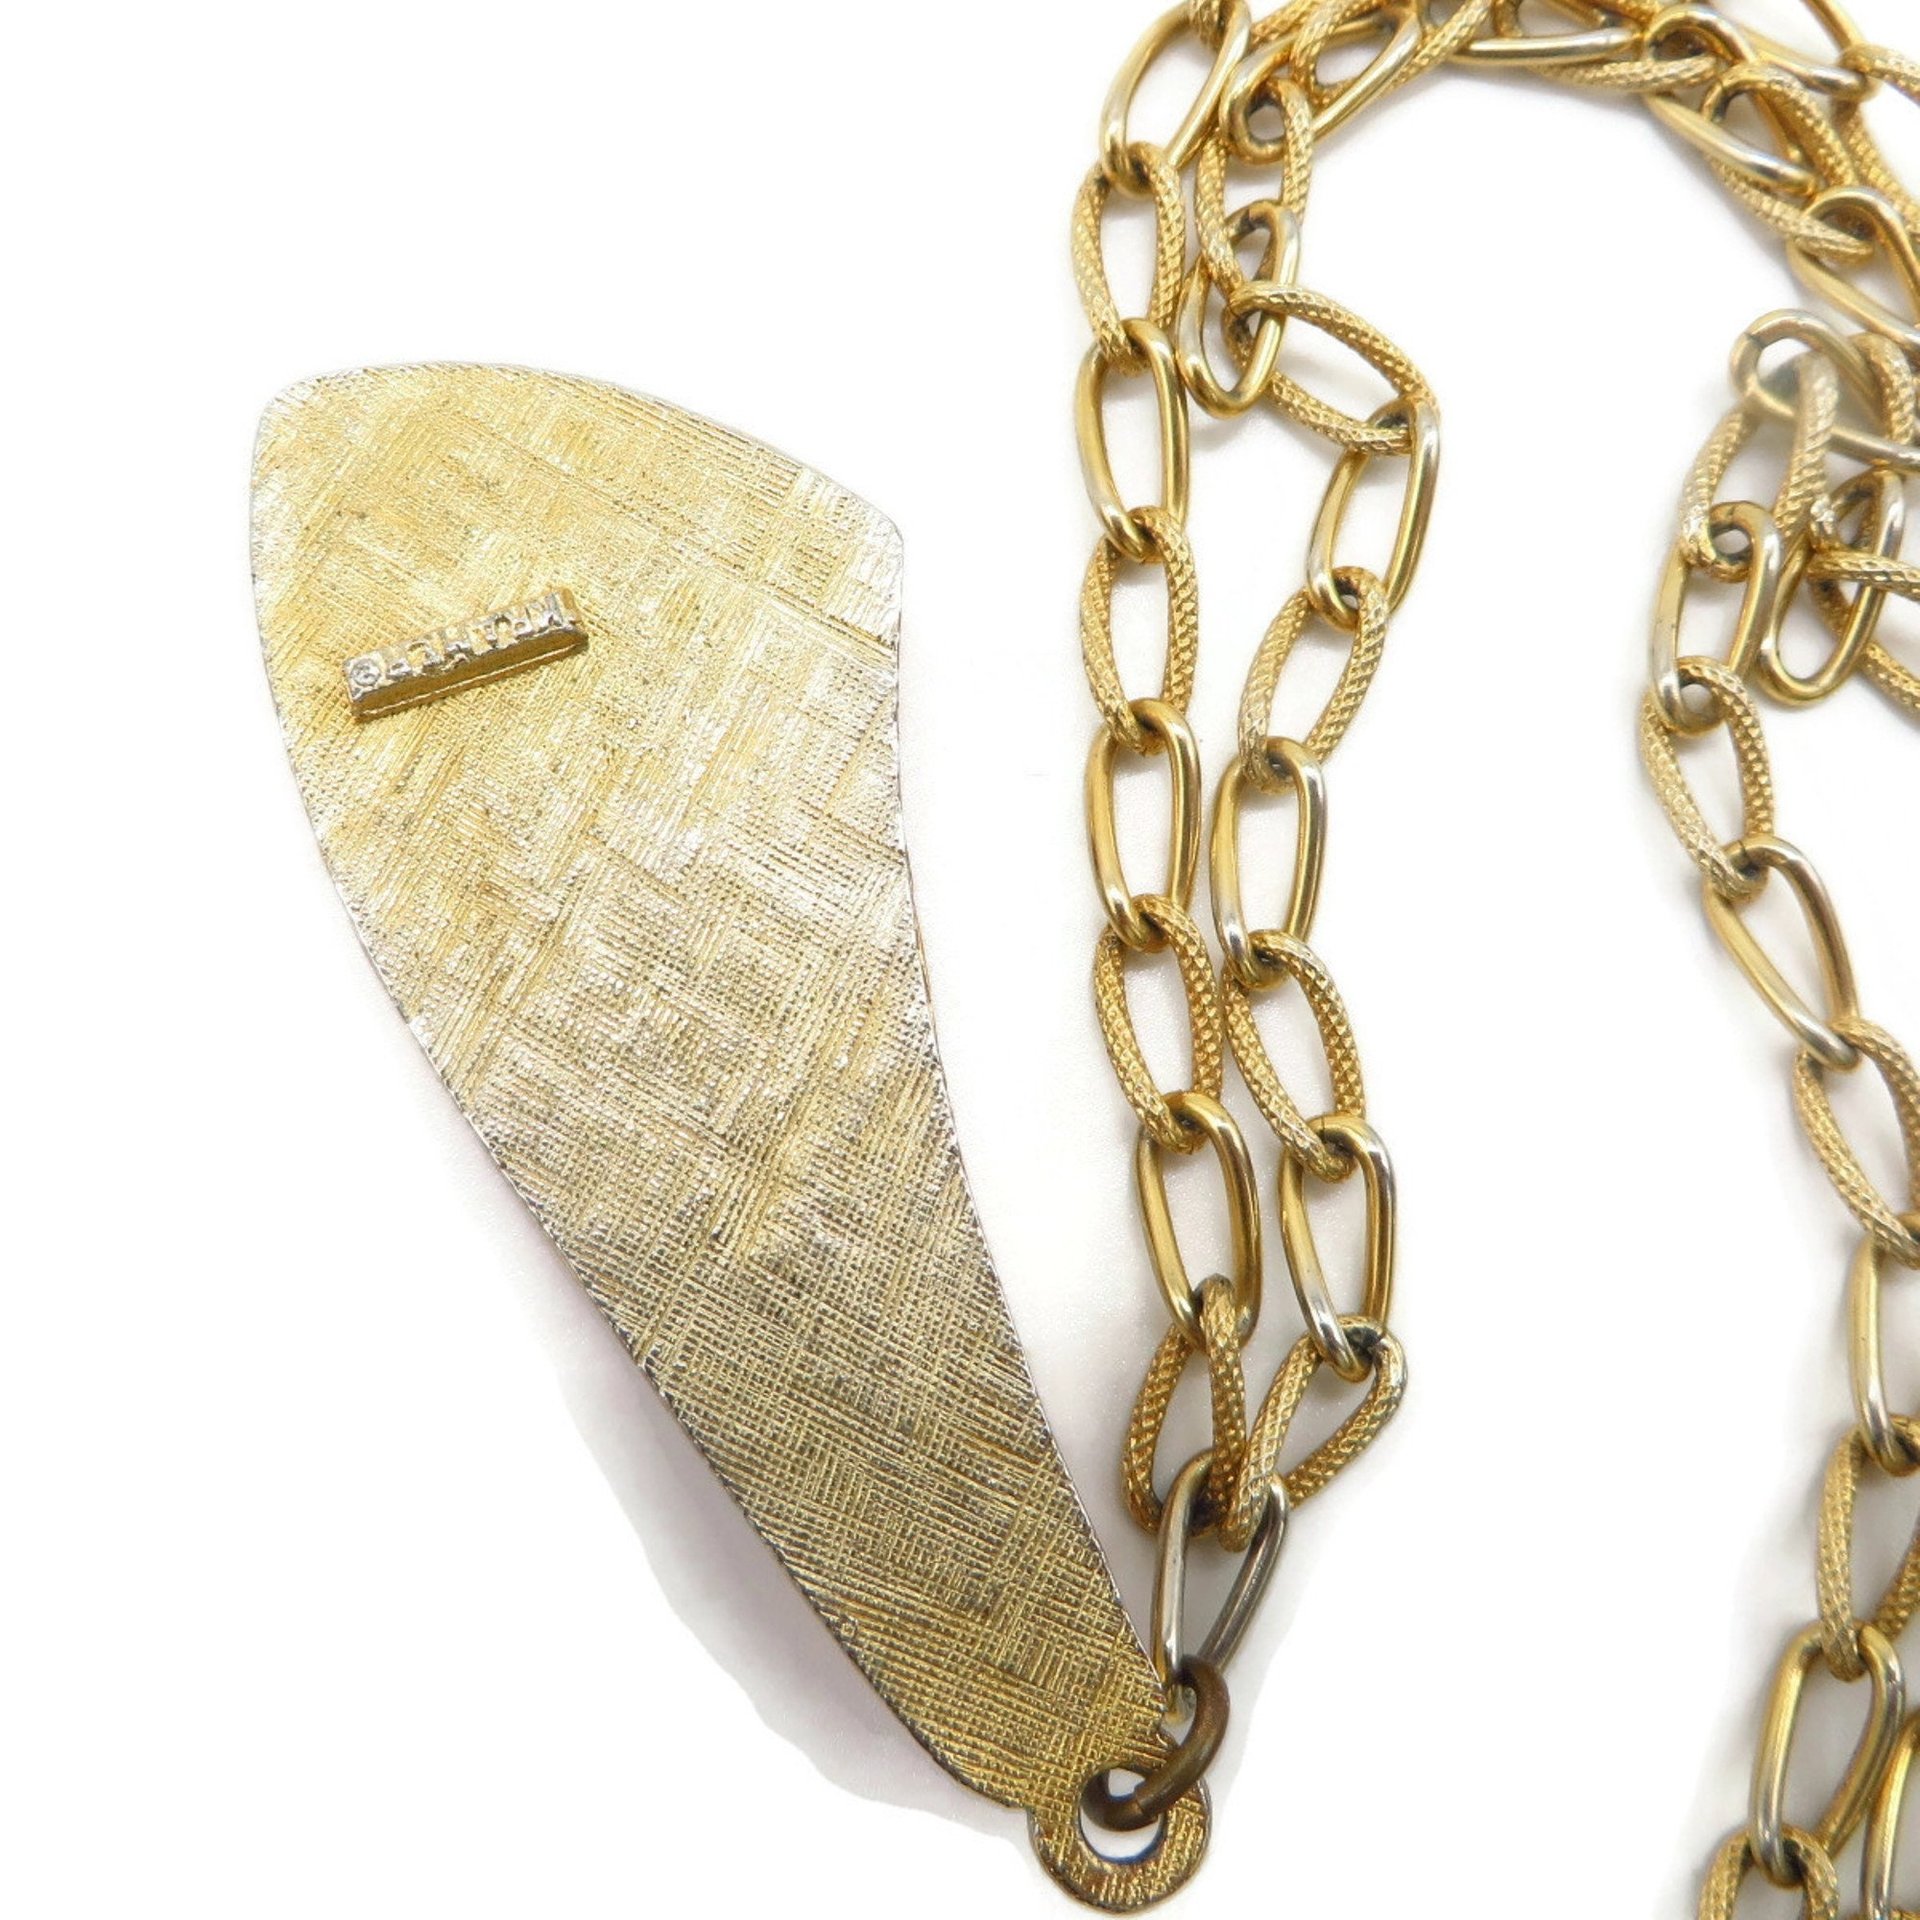 Kramer Orange Beaded Pendant Chain Link Necklace